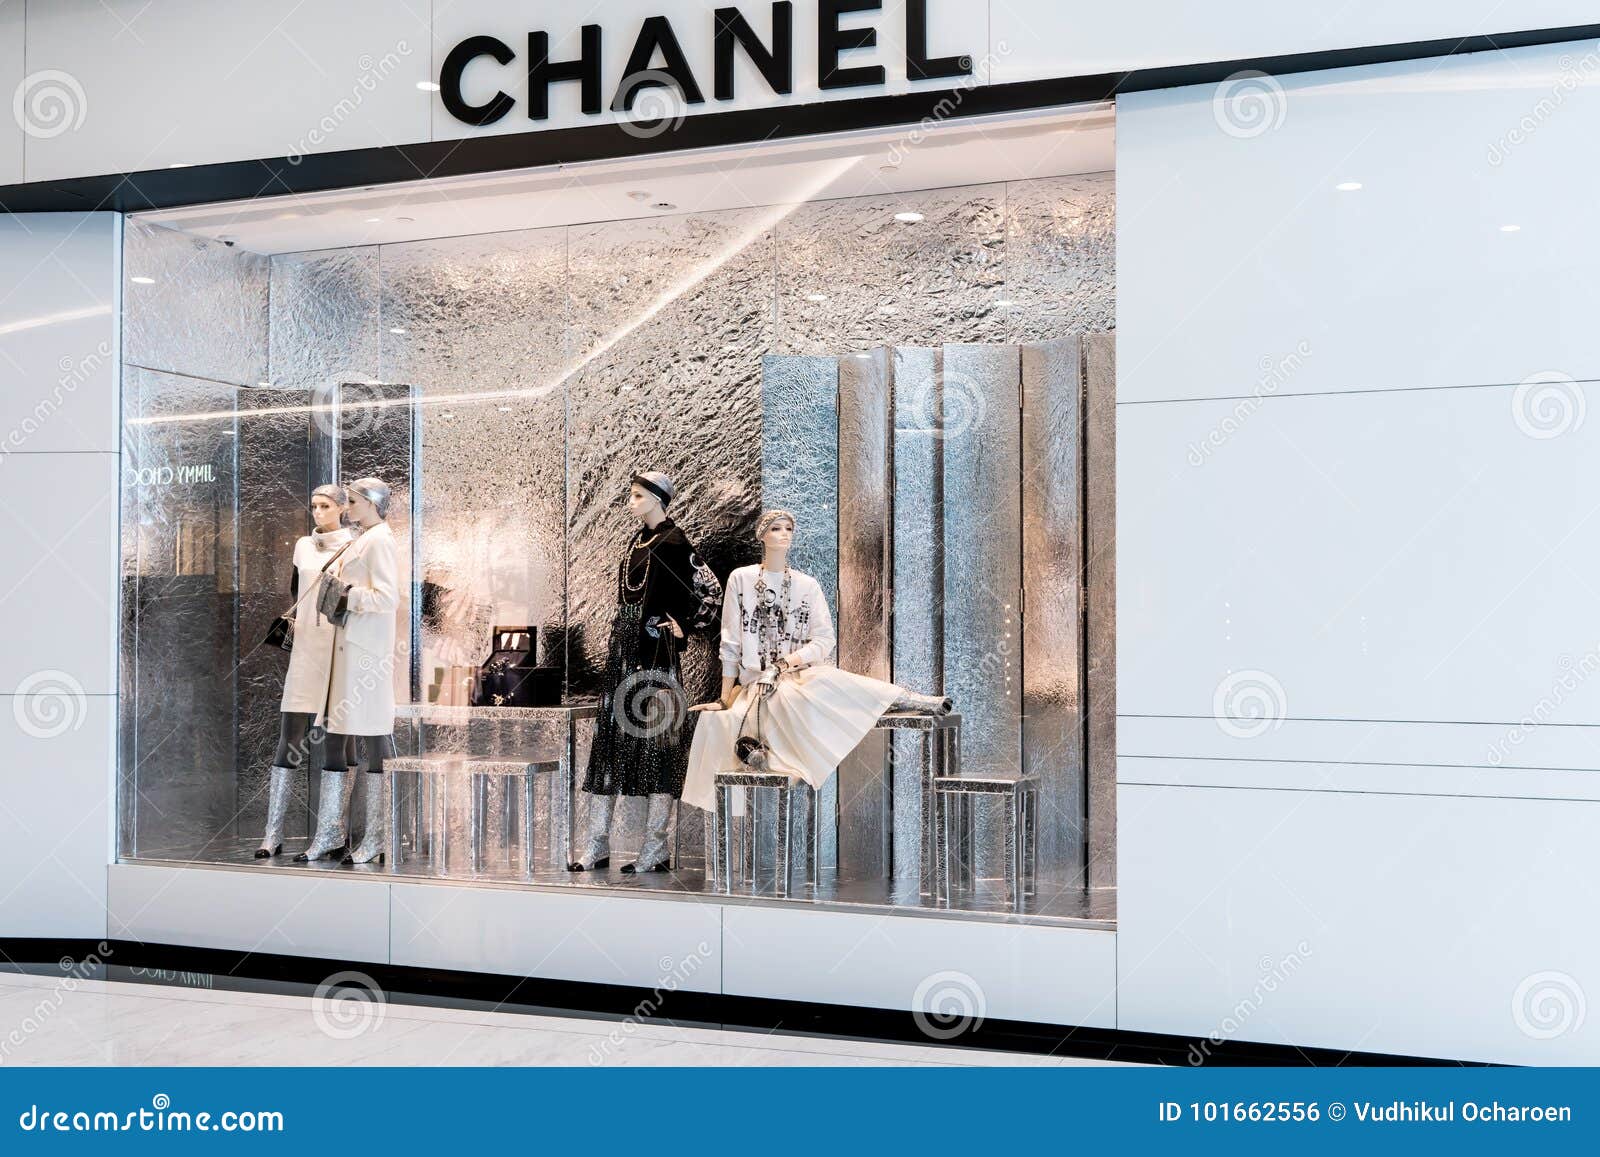 Stjerne Porto tragedie Chanel Shop at Emquatier, Bangkok, Thailand, Sep 7, 2017 Editorial Photo -  Image of glass, casual: 101662556